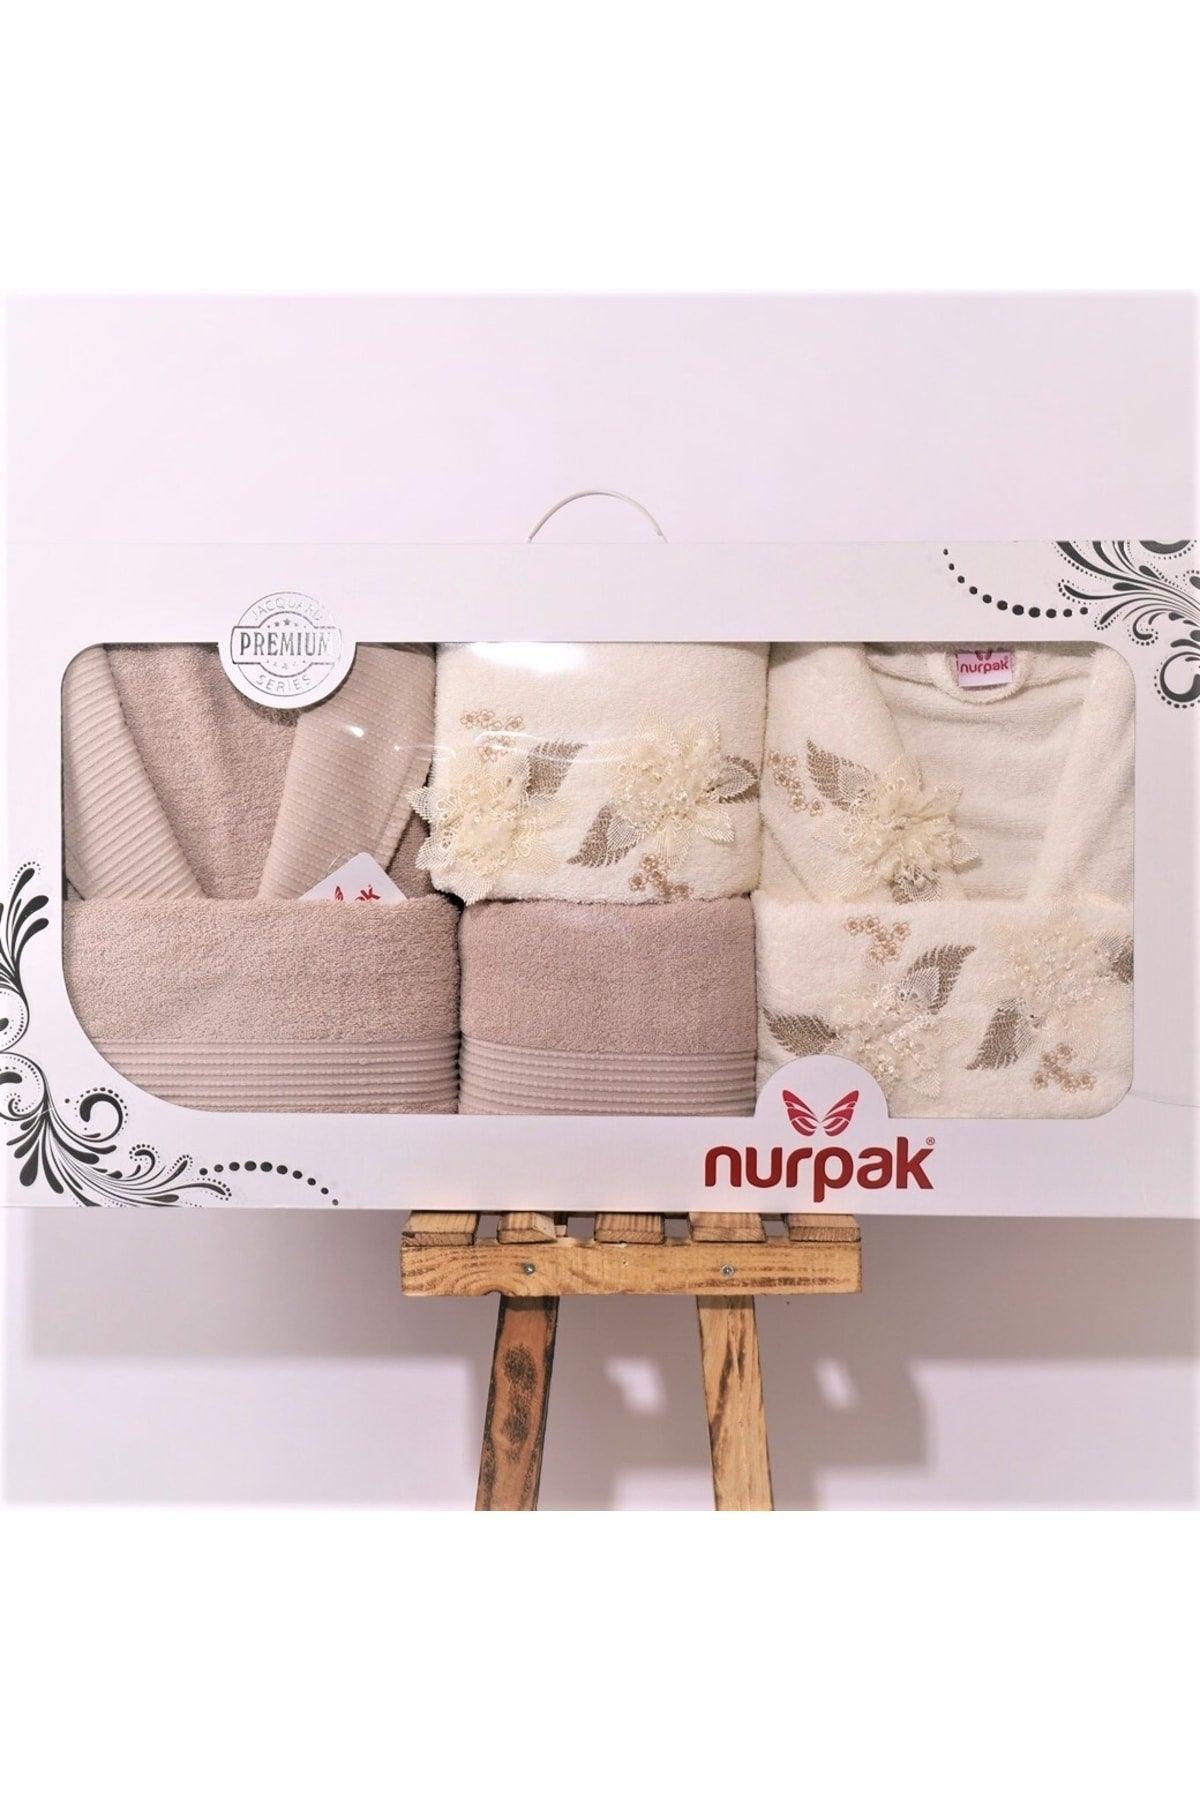 Pamir Luxury Embroidered Cotton Family Bathrobe Set (8 Pcs) - Swordslife